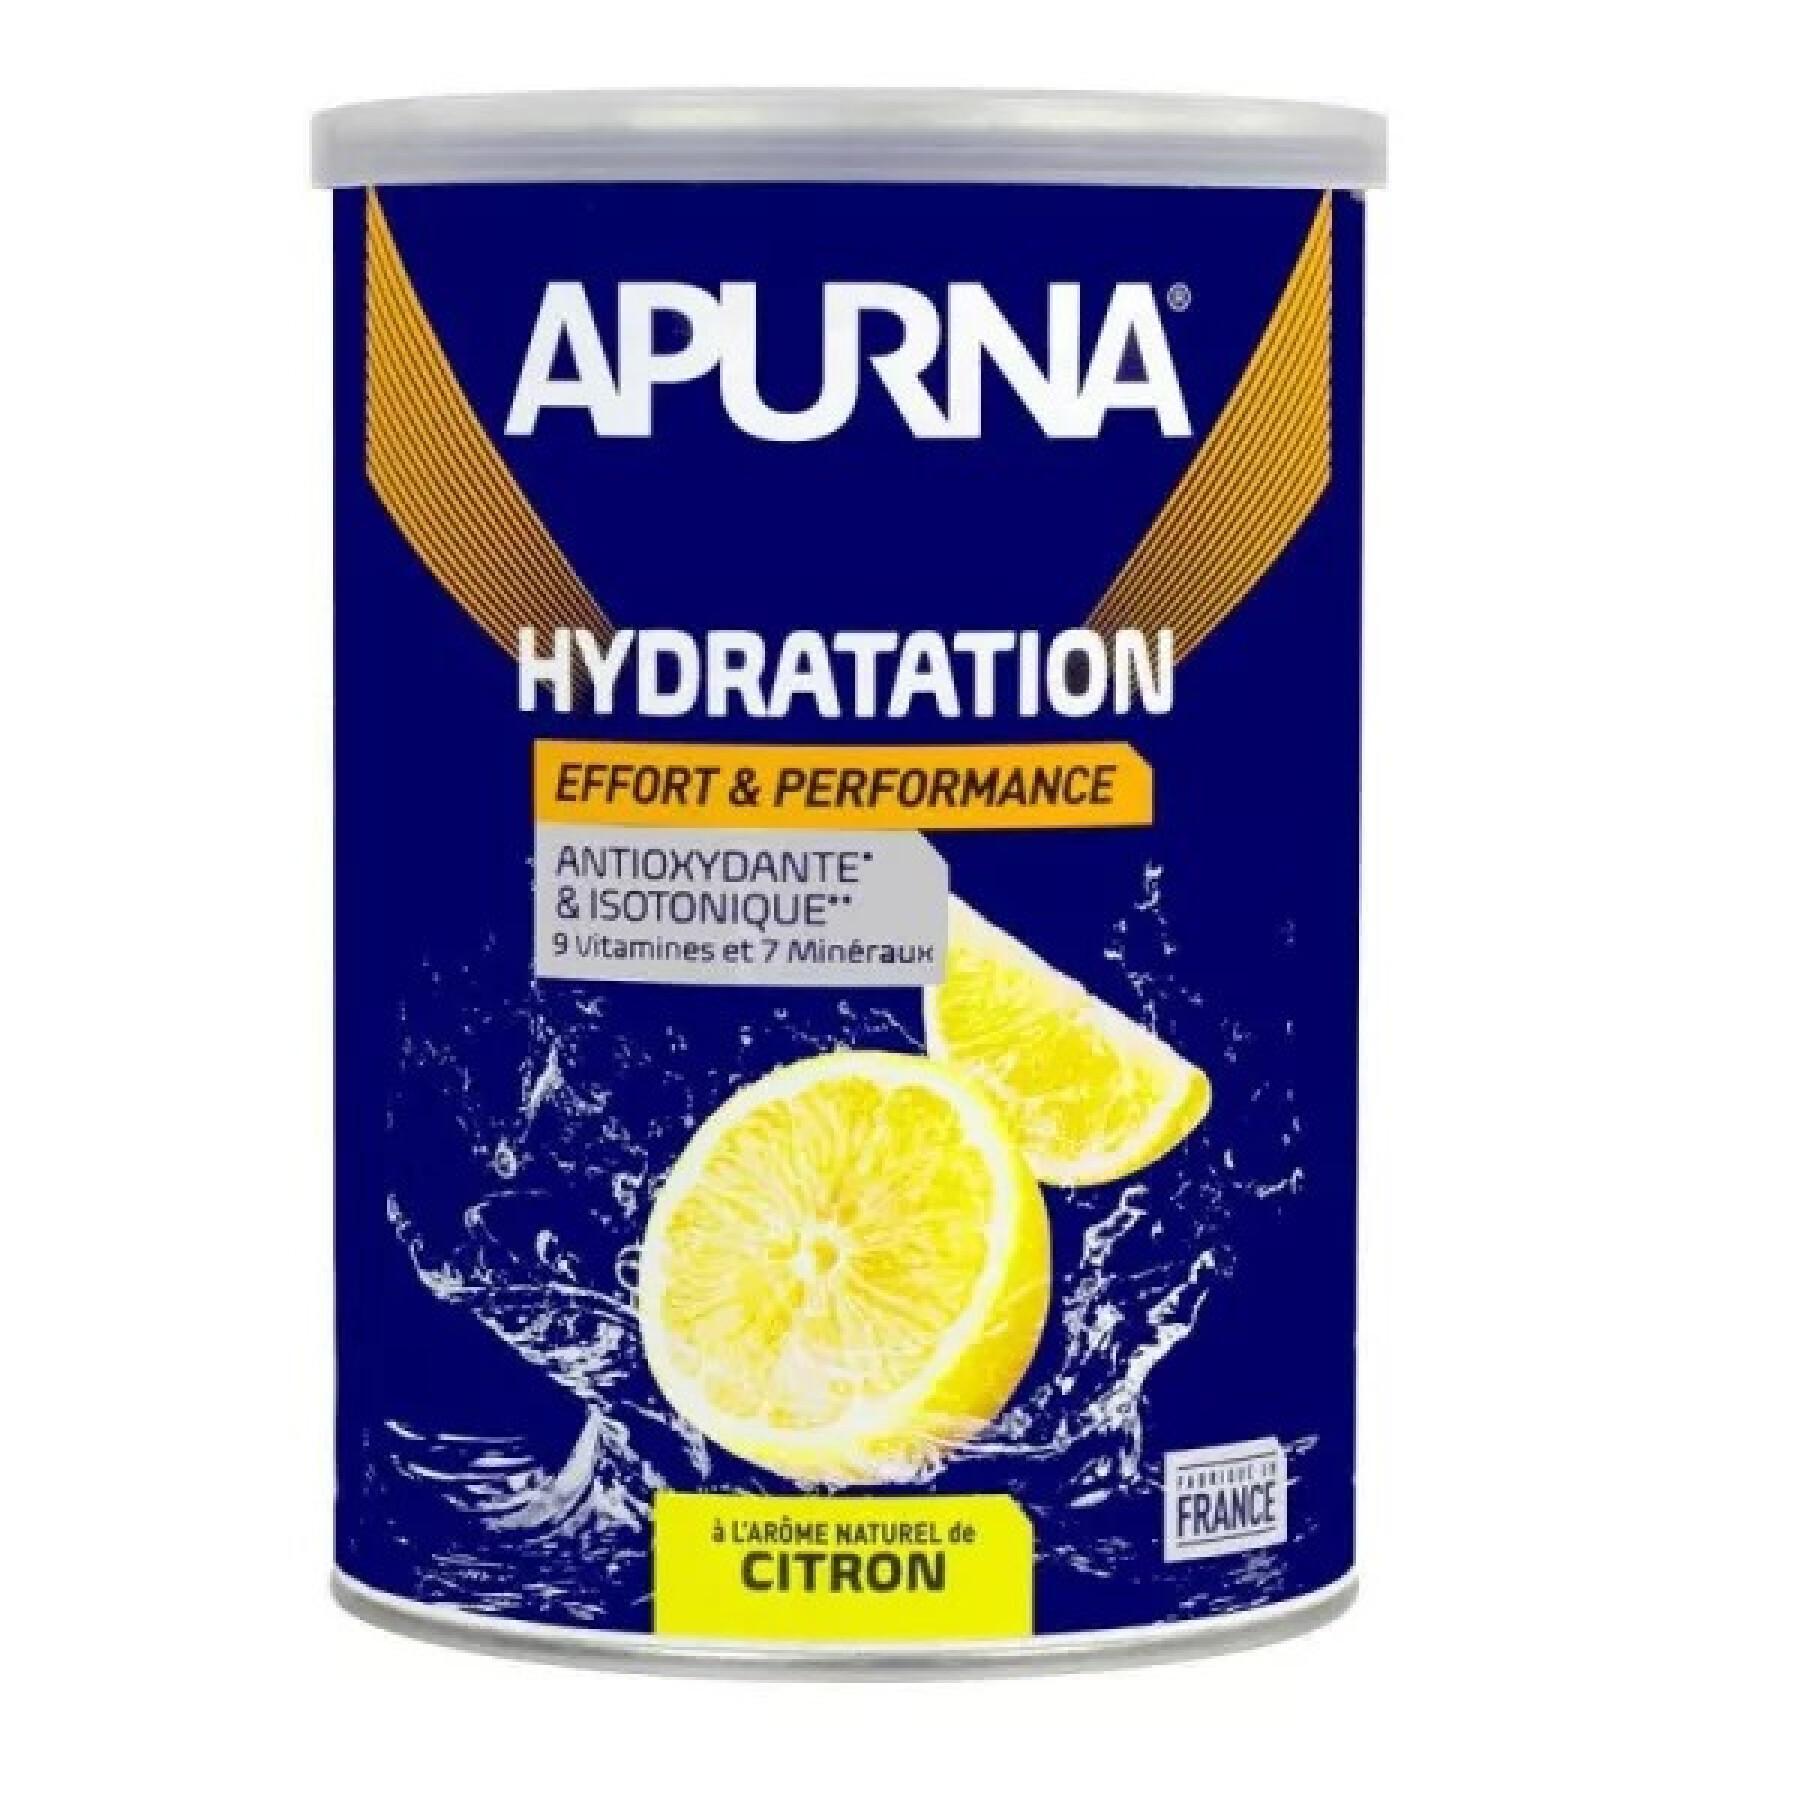 Hydration drink lemon flavor Apurna